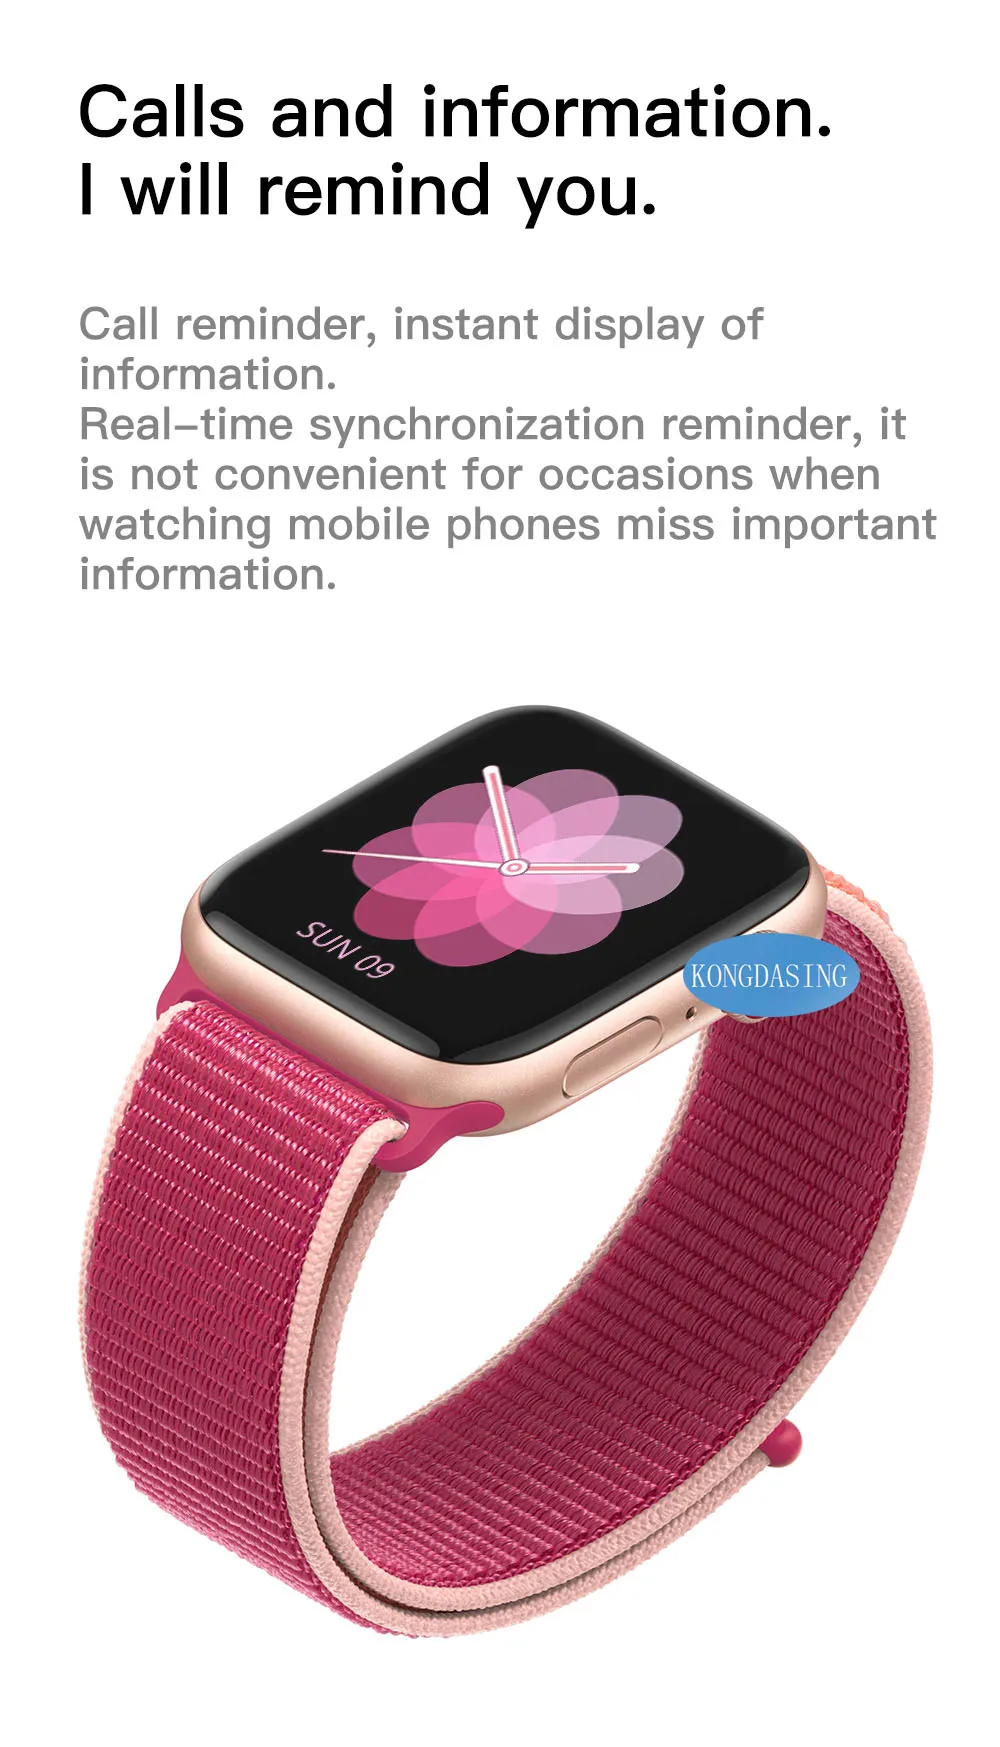 IWO 12 часы серии 5 1:1 Смарт часы 40 мм 44 мм Bluetooth часы iwo12 для apple iPhone IOS Android управление Siri PK IWO 11